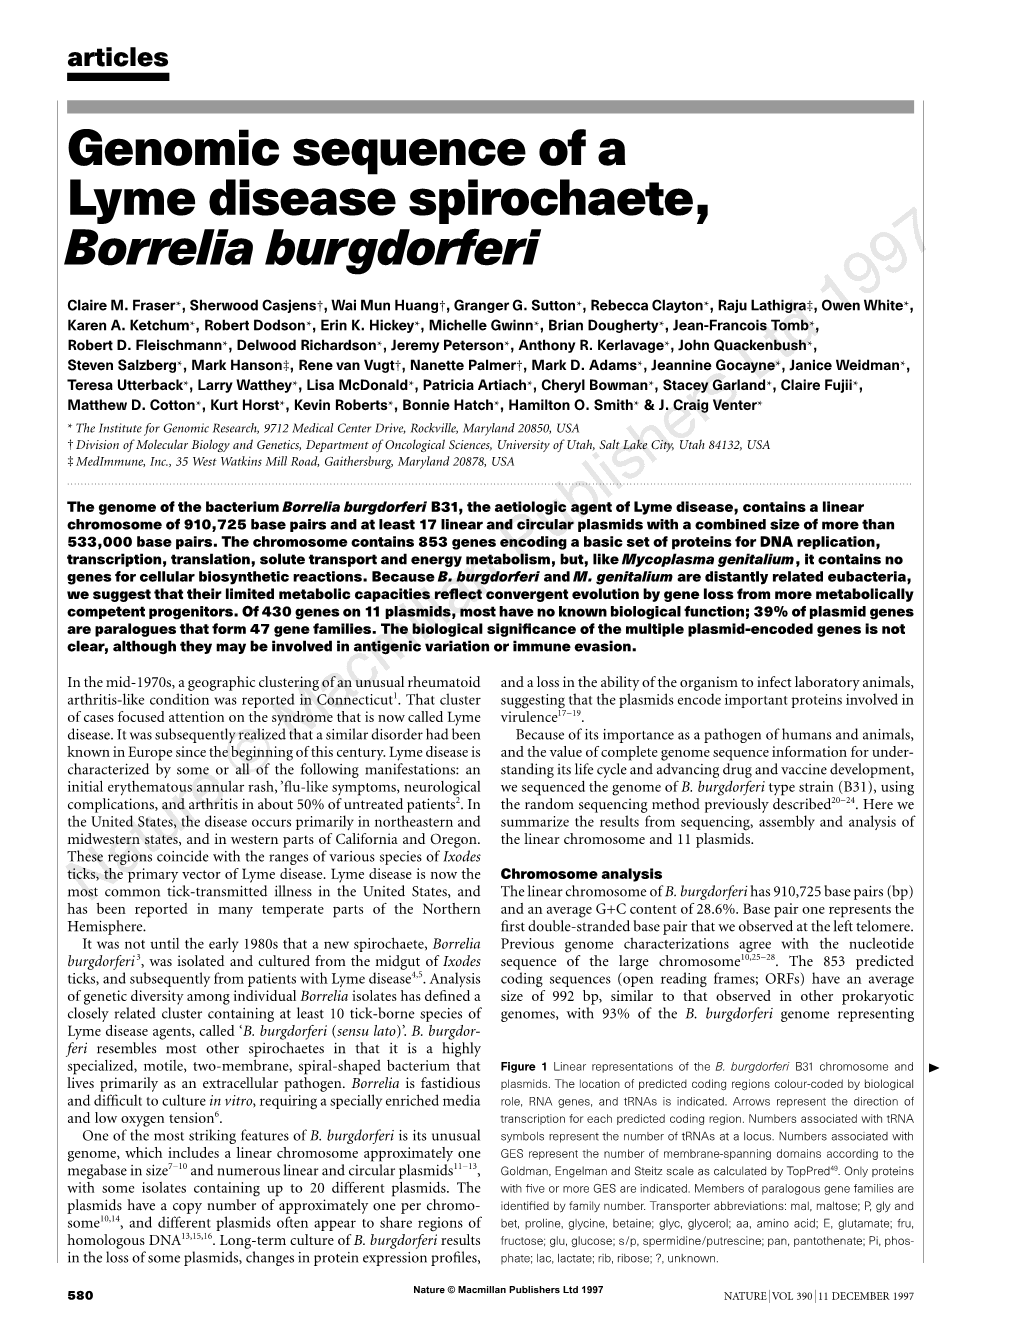 Genomic Sequence of a Lyme Disease Spirochaete, Borrelia Burgdorferi